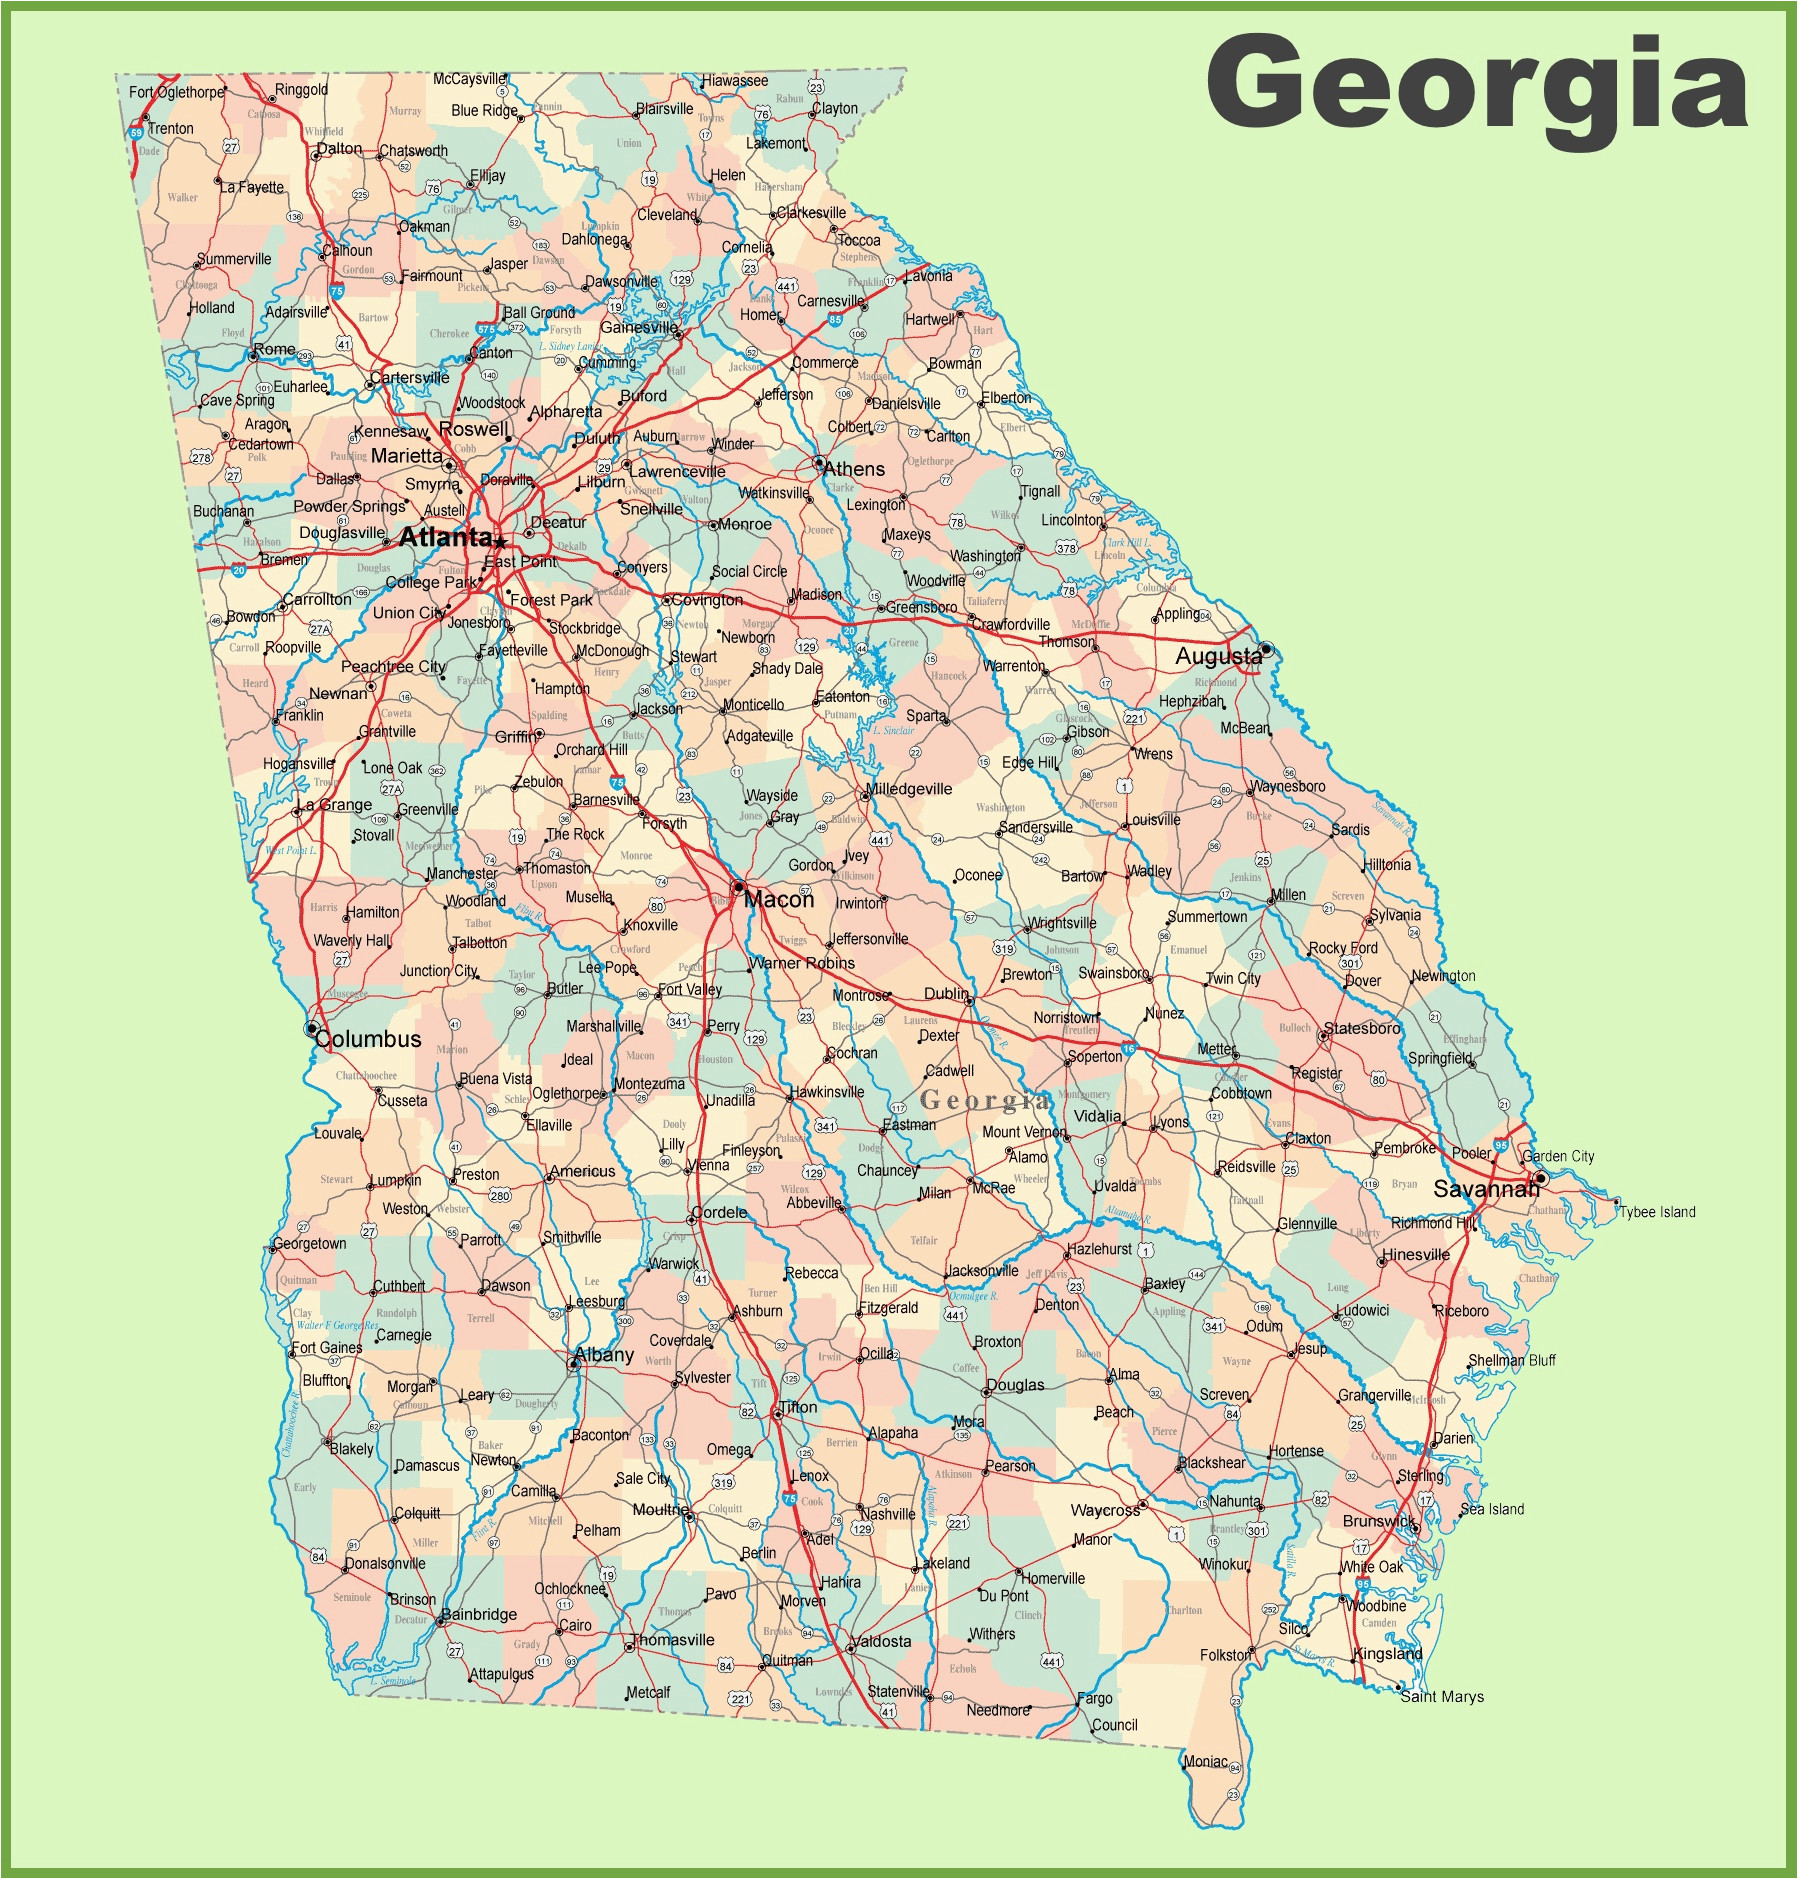 Southeast Georgia Map Georgia Road Map With Cities And Towns Of Southeast Georgia Map 